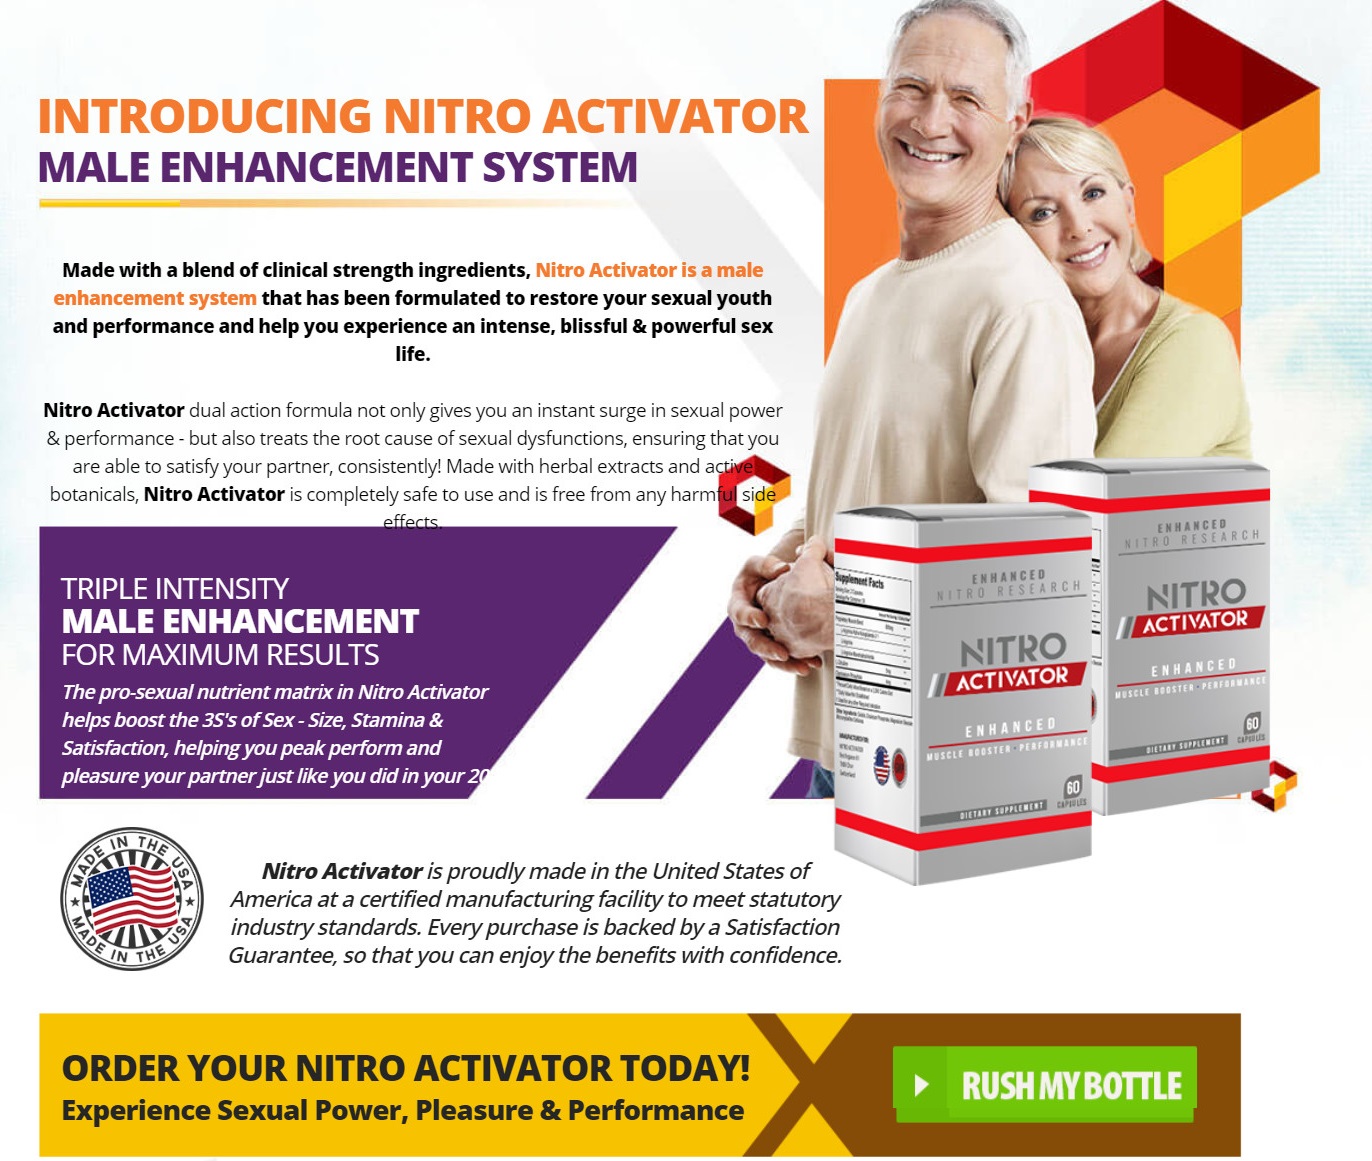 Nitro Activator Introduction